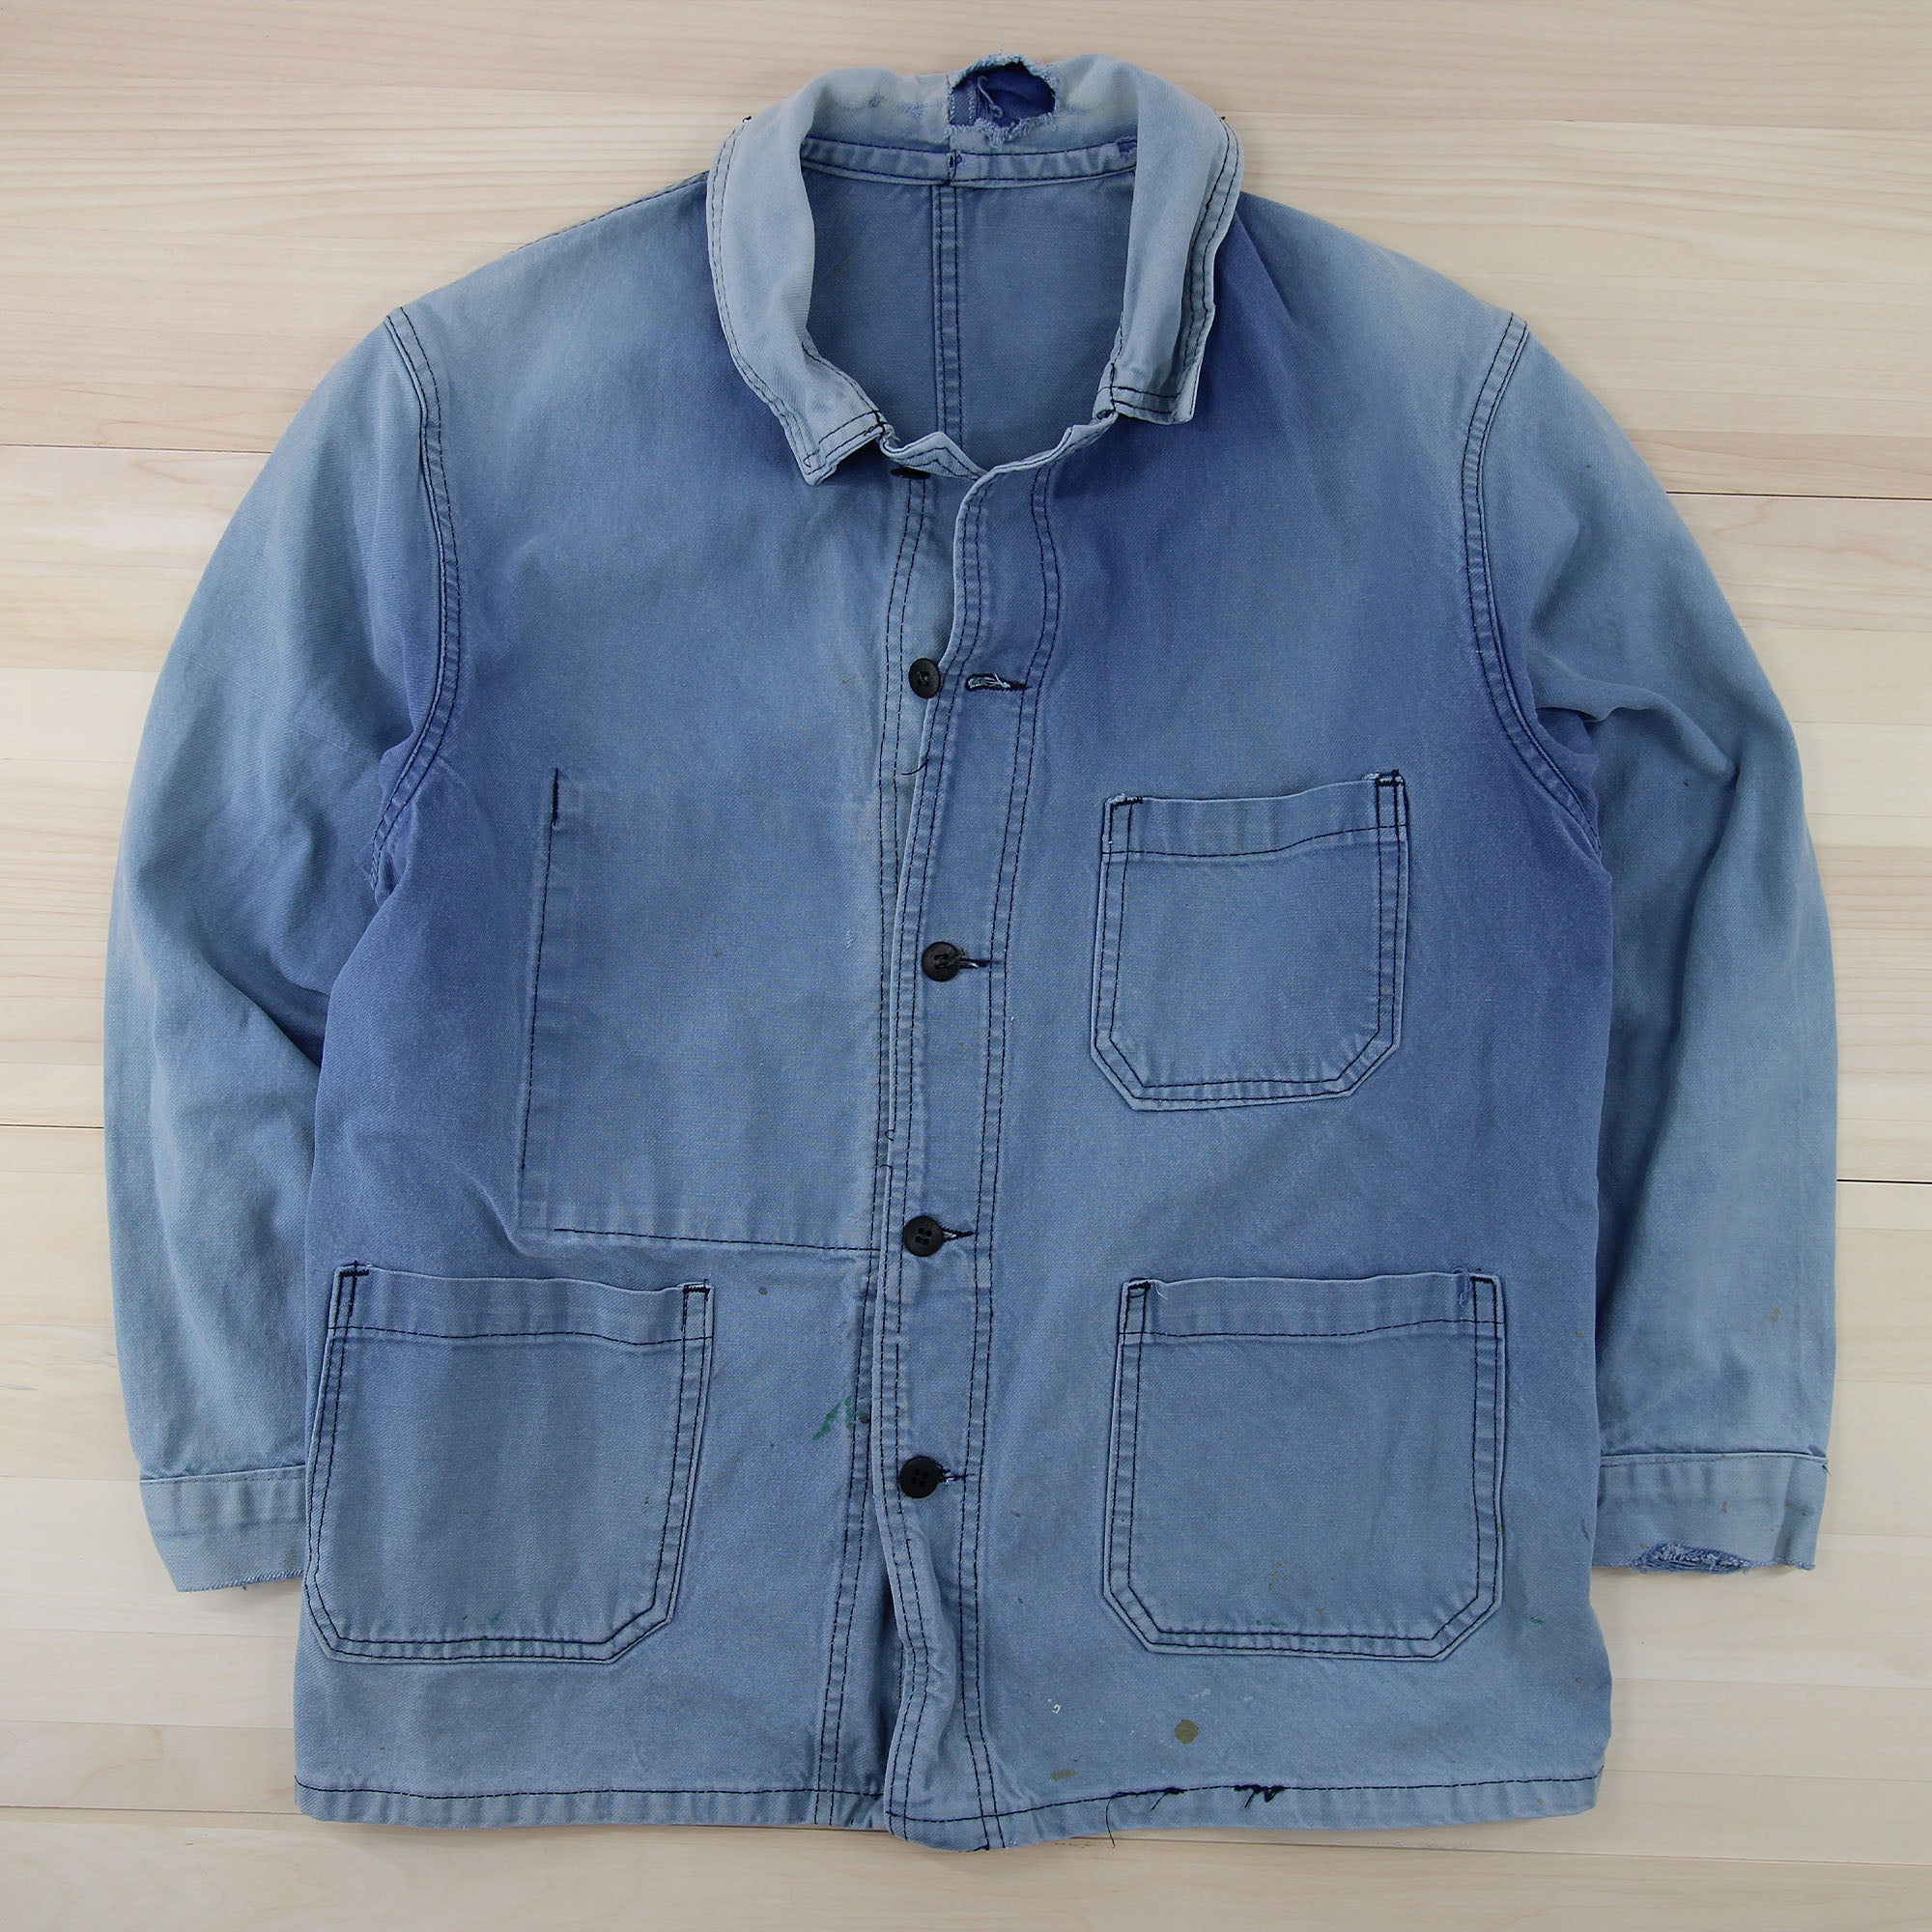 Vintage Blue French Work Jacket - Medium